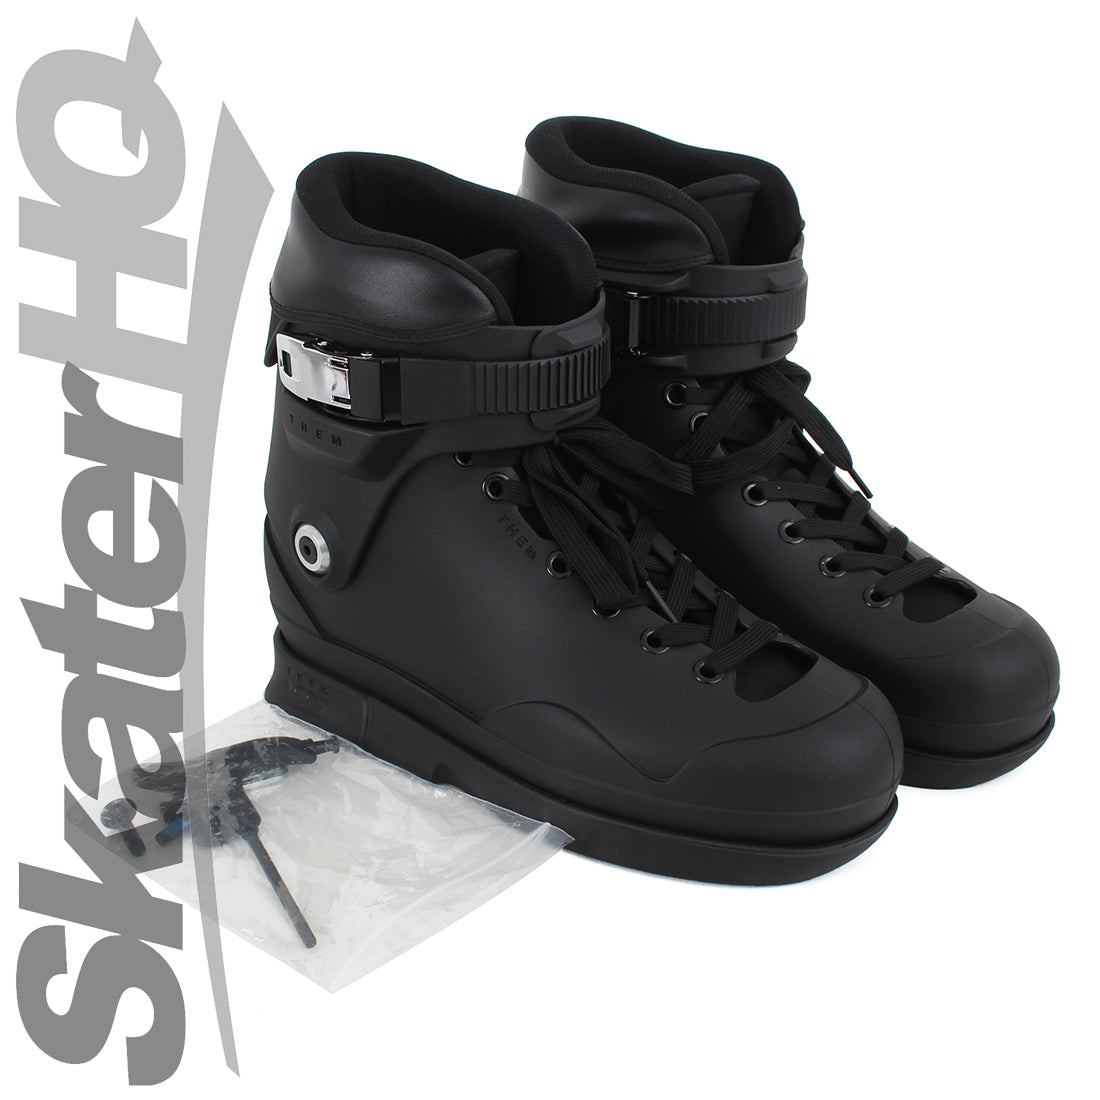 THEM 909 Boot Black 9-10US Inline Aggressive Skates